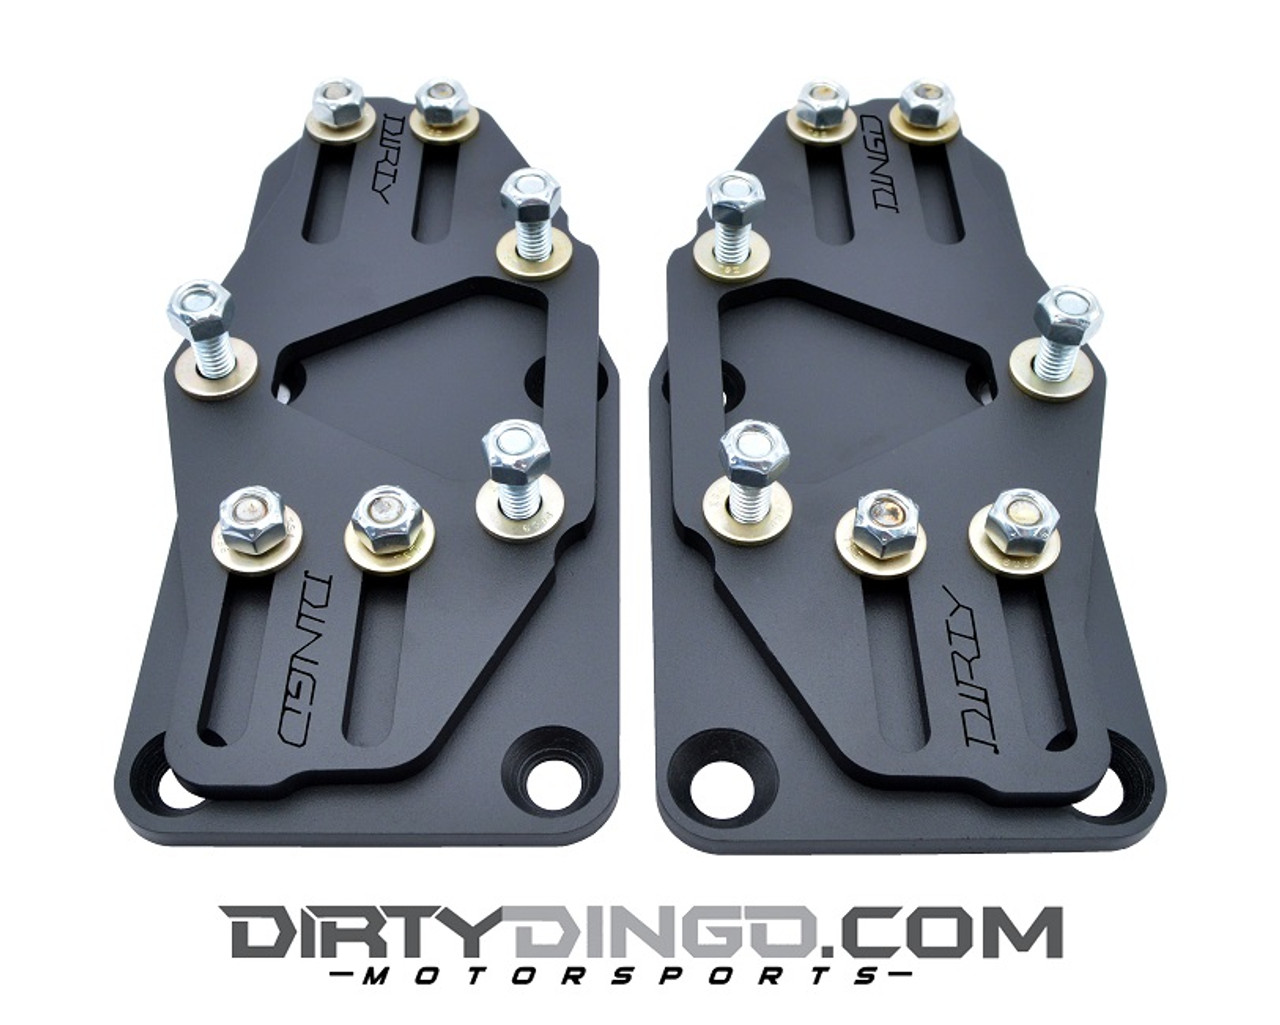 Dirty Dingo Sliders Adjustable Motor Mount Adapters - Black Powder Coat - LS Engines